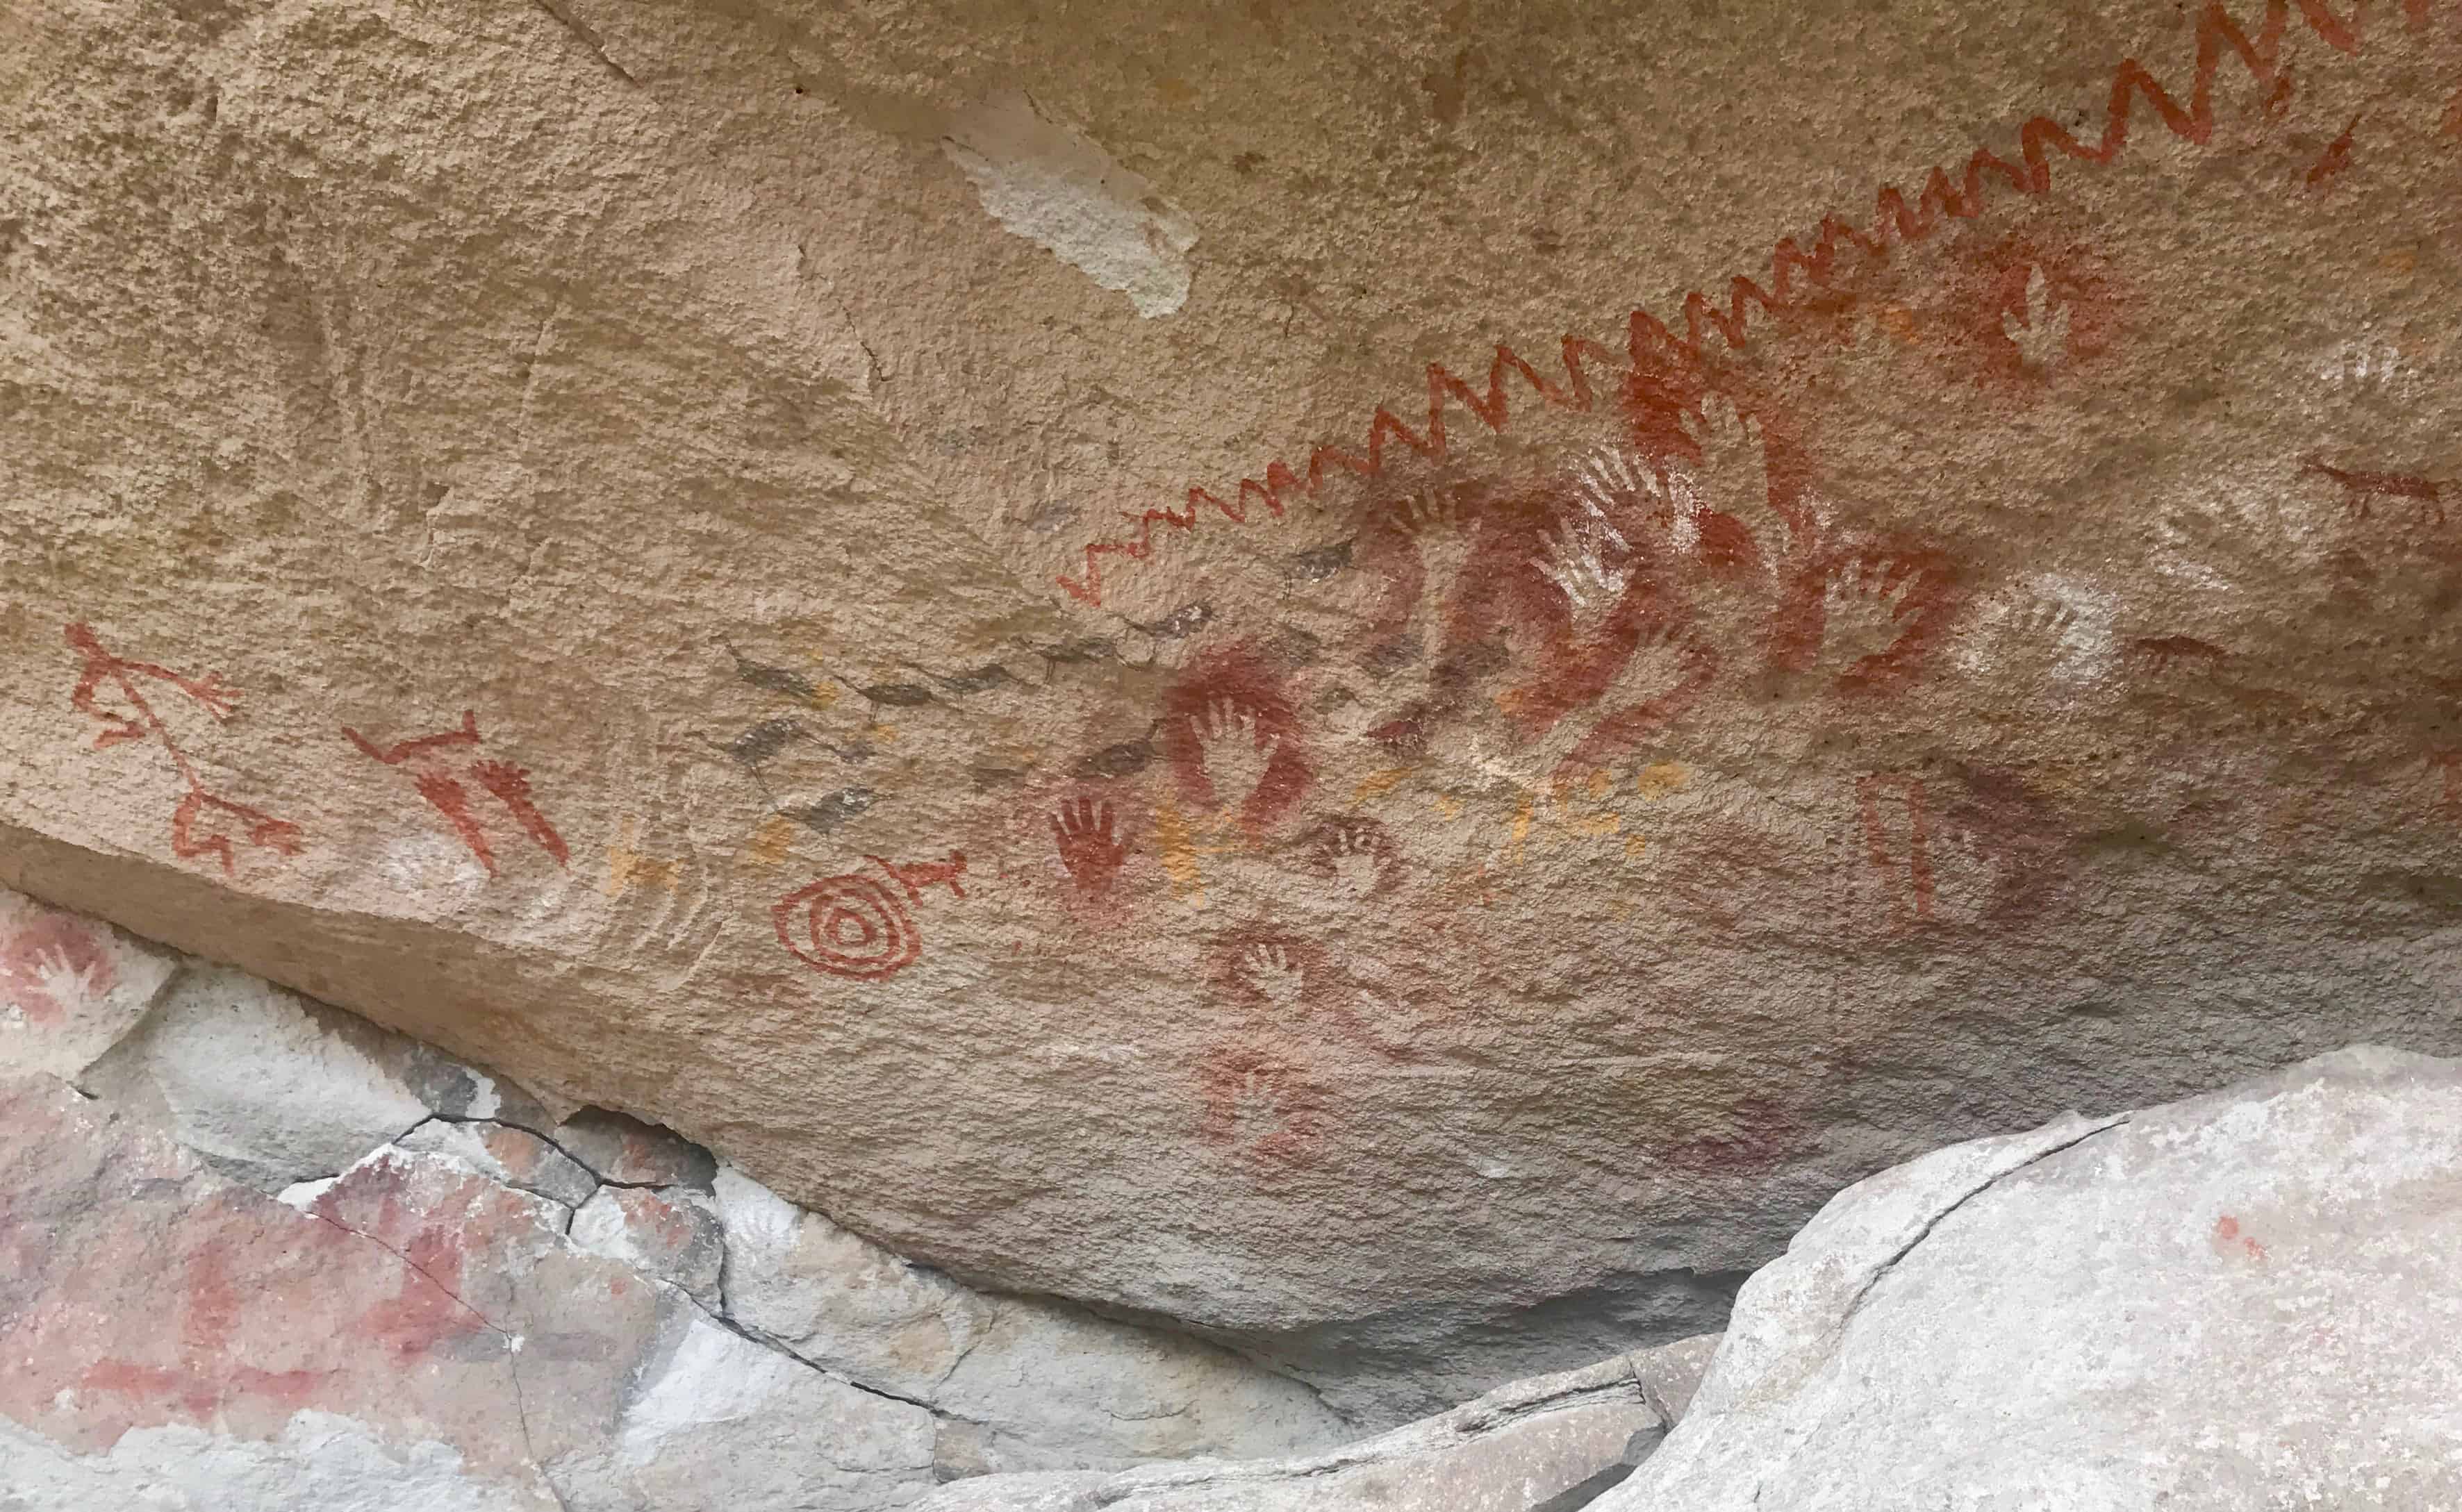 Rock painting of the famous Dancer alongside geometric patterns at Cueva de Las Manos